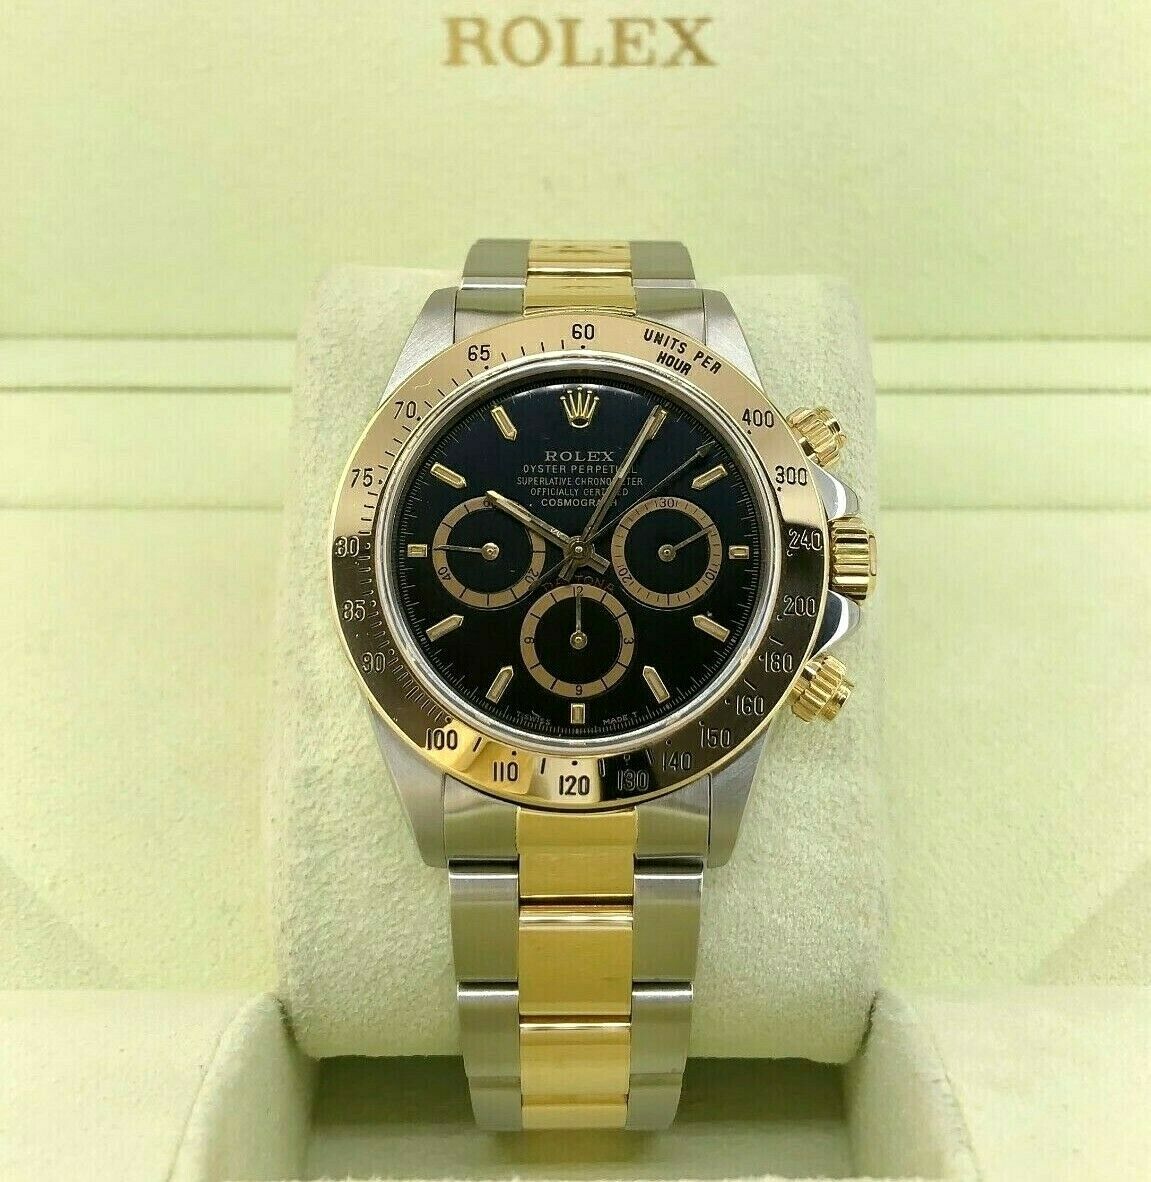 Rolex Cosmograph Daytona 40mm 18K Yellow Gold Steel Watch Ref 16523 U Serial